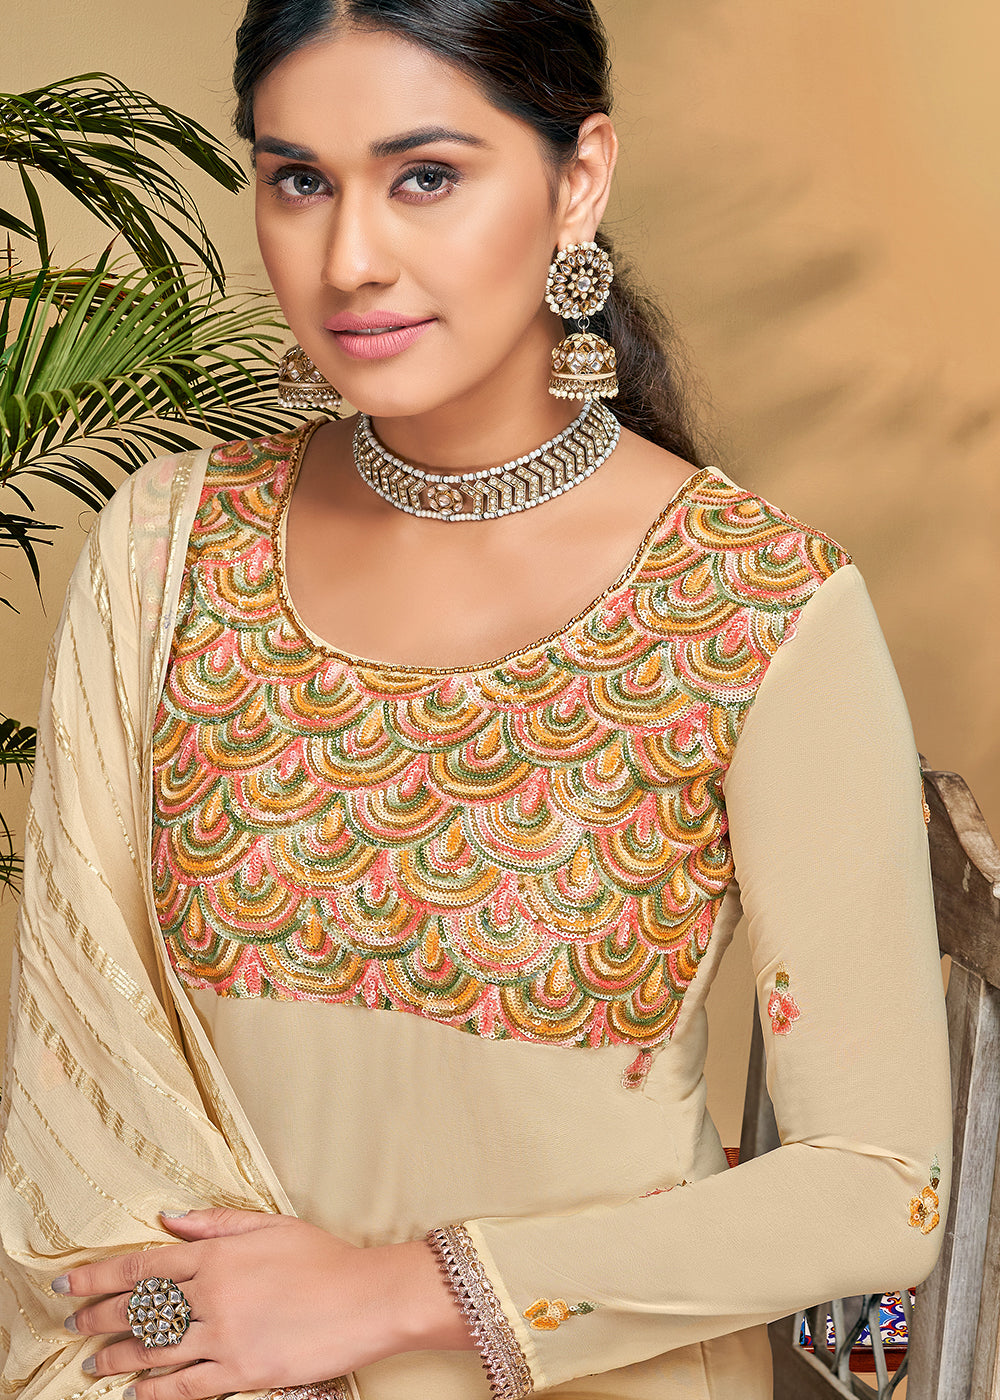 Buy Now Fantastic Creamy Beige Georgette Embroidered Salwar Kurta Set Online in USA, UK, Canada & Worldwide at Empress Clothing.